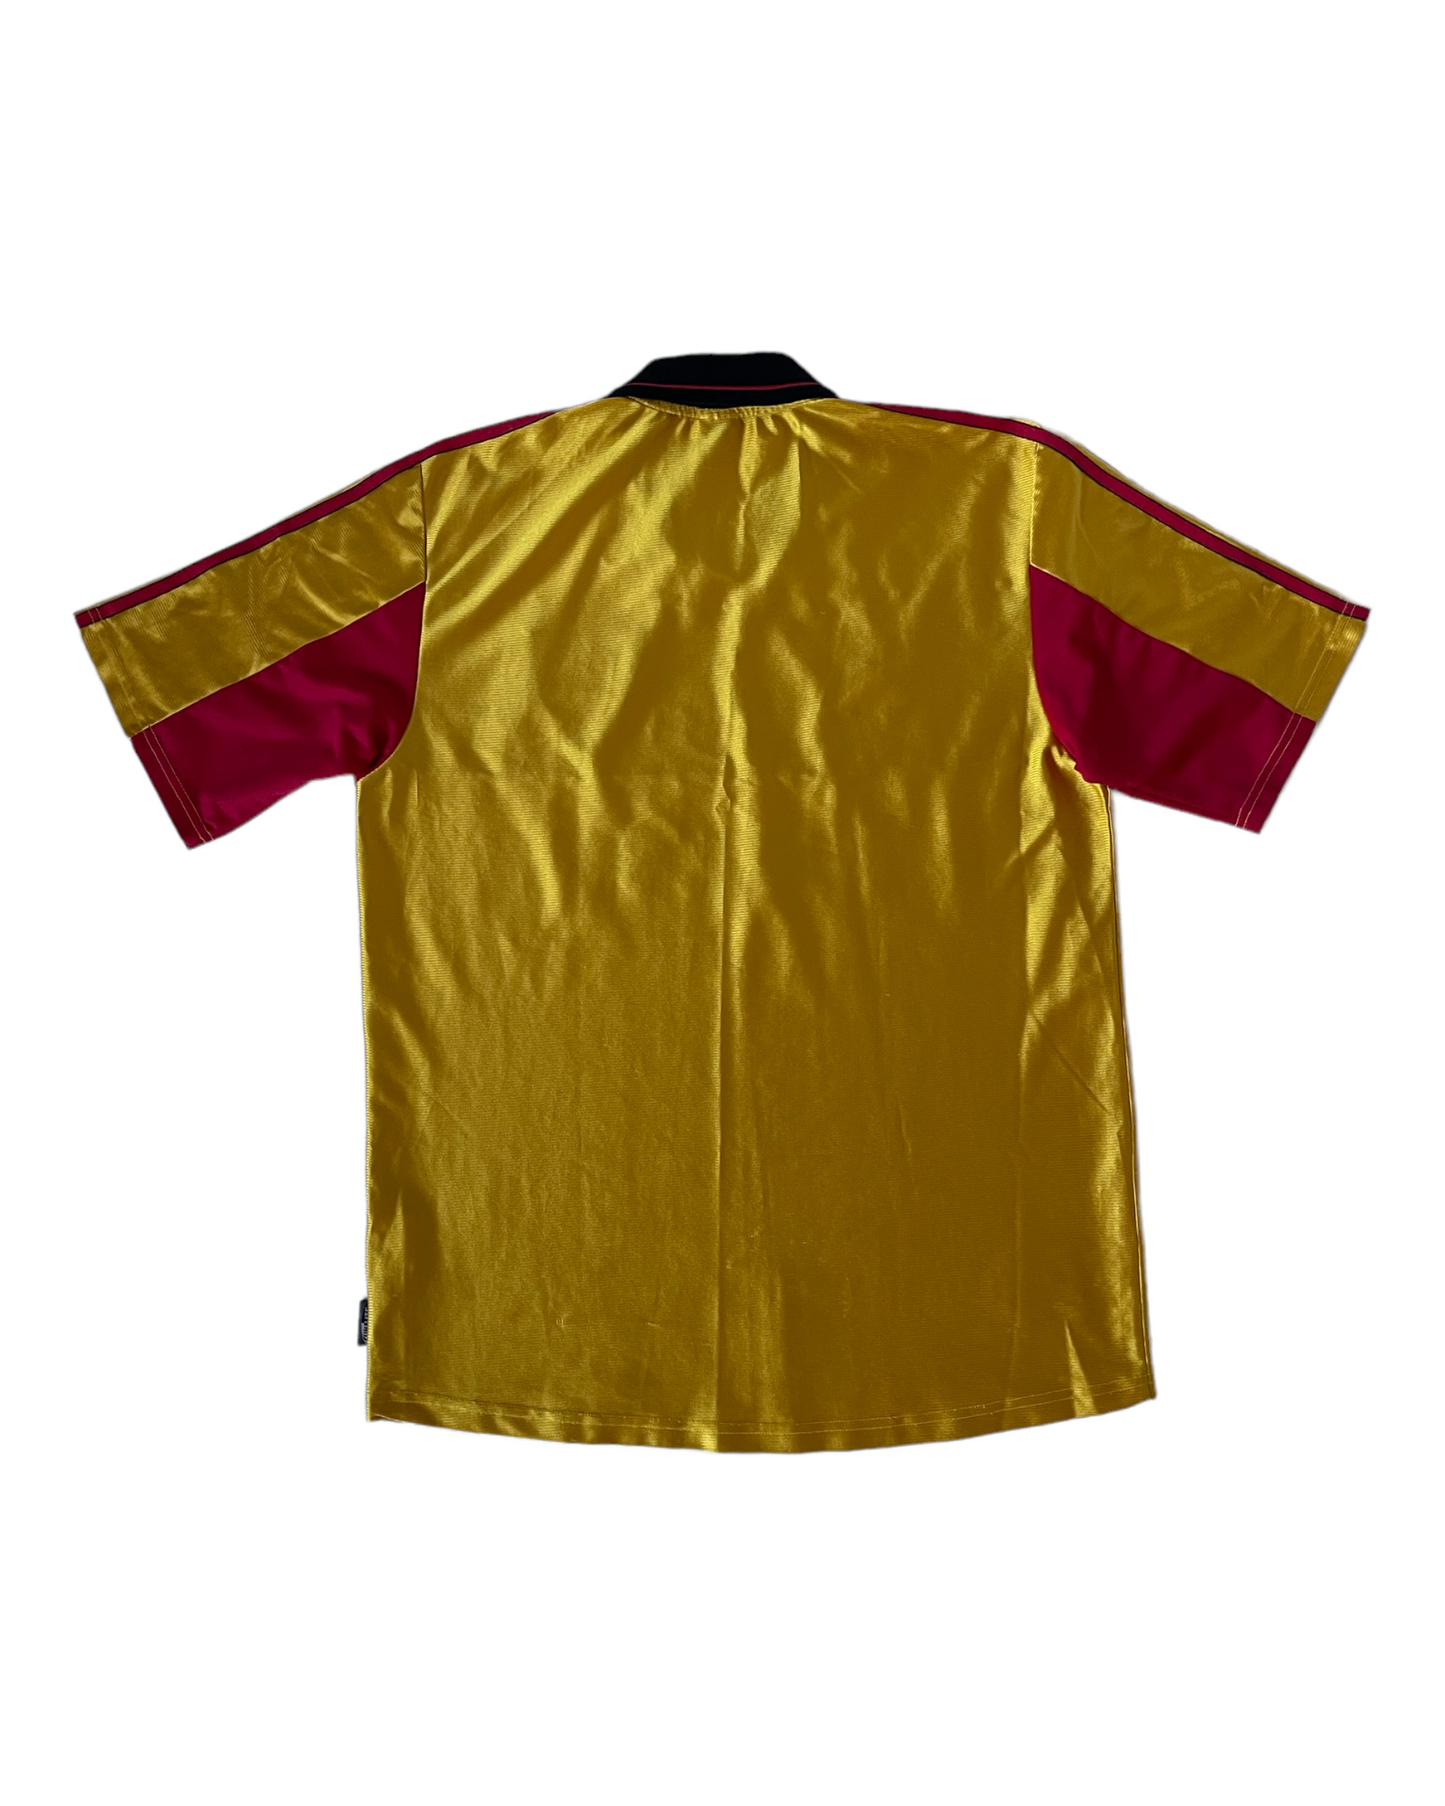 VFB Stuttgart Adidas 1999-2000 Away Third Football Shirt Shiny Golden Red Debitel Size L Climalite